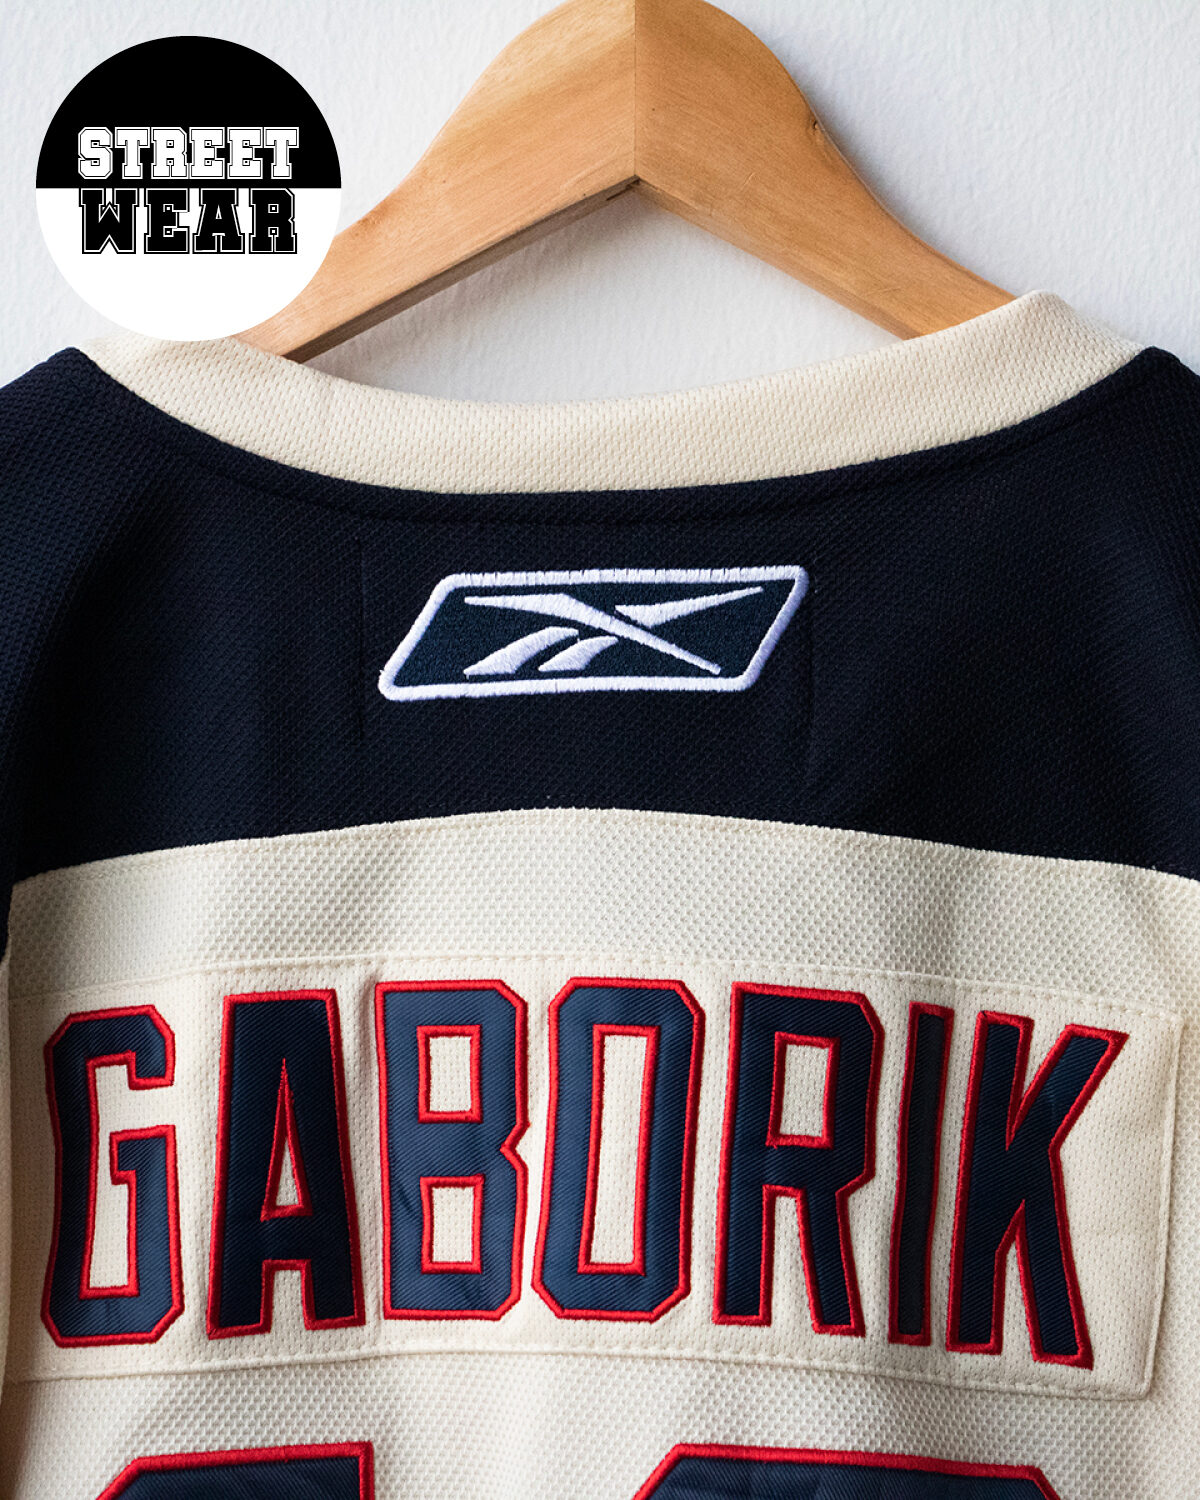 Reebok - New York Rangers hockey tunic